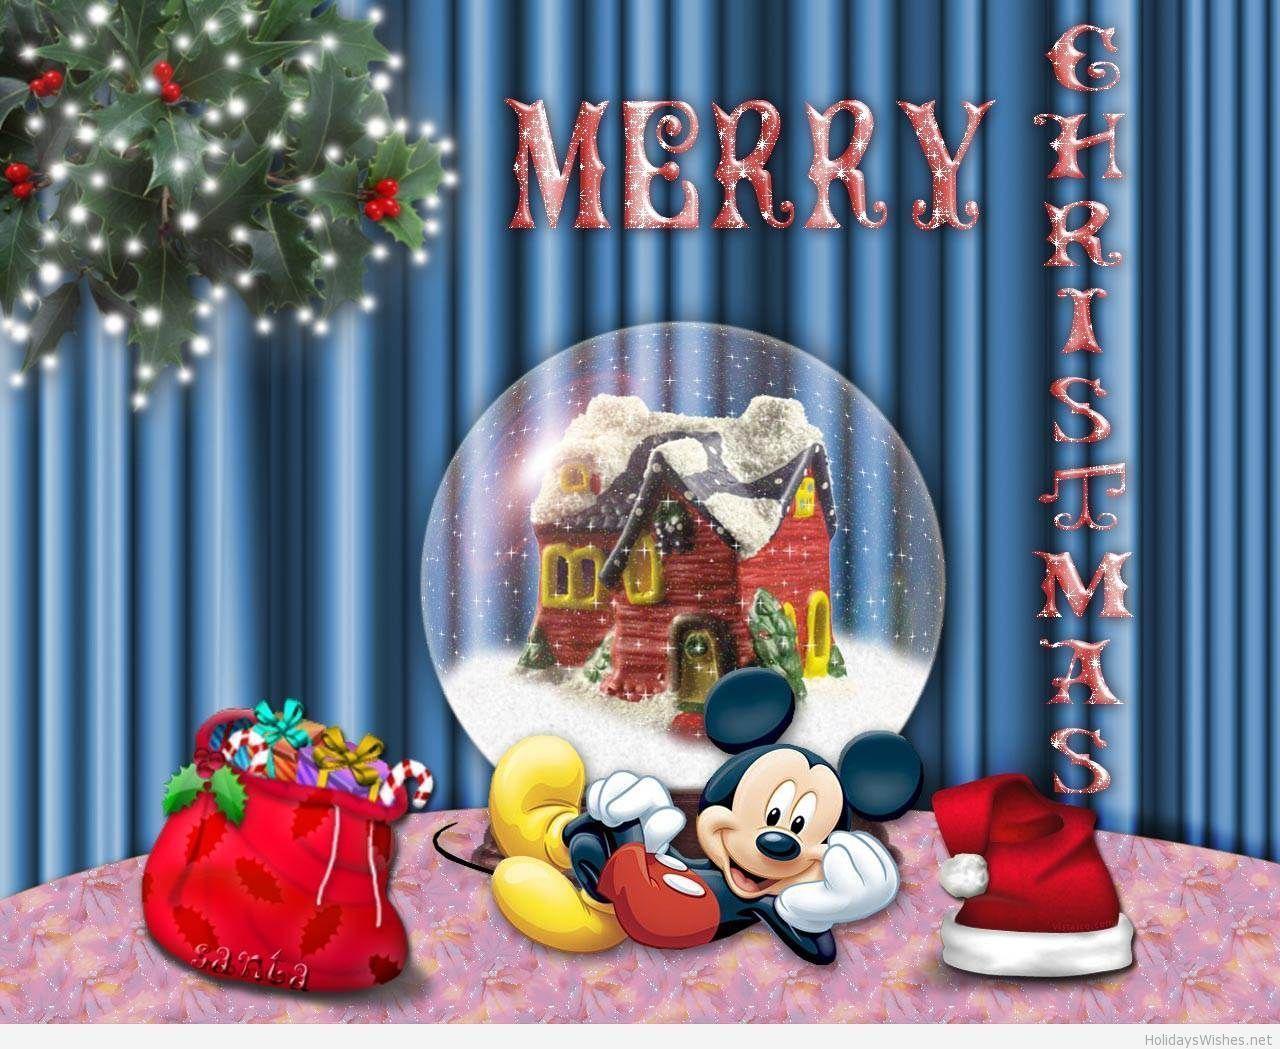 Funny merry Christmas HD cartoon wallpaper 2014 2015